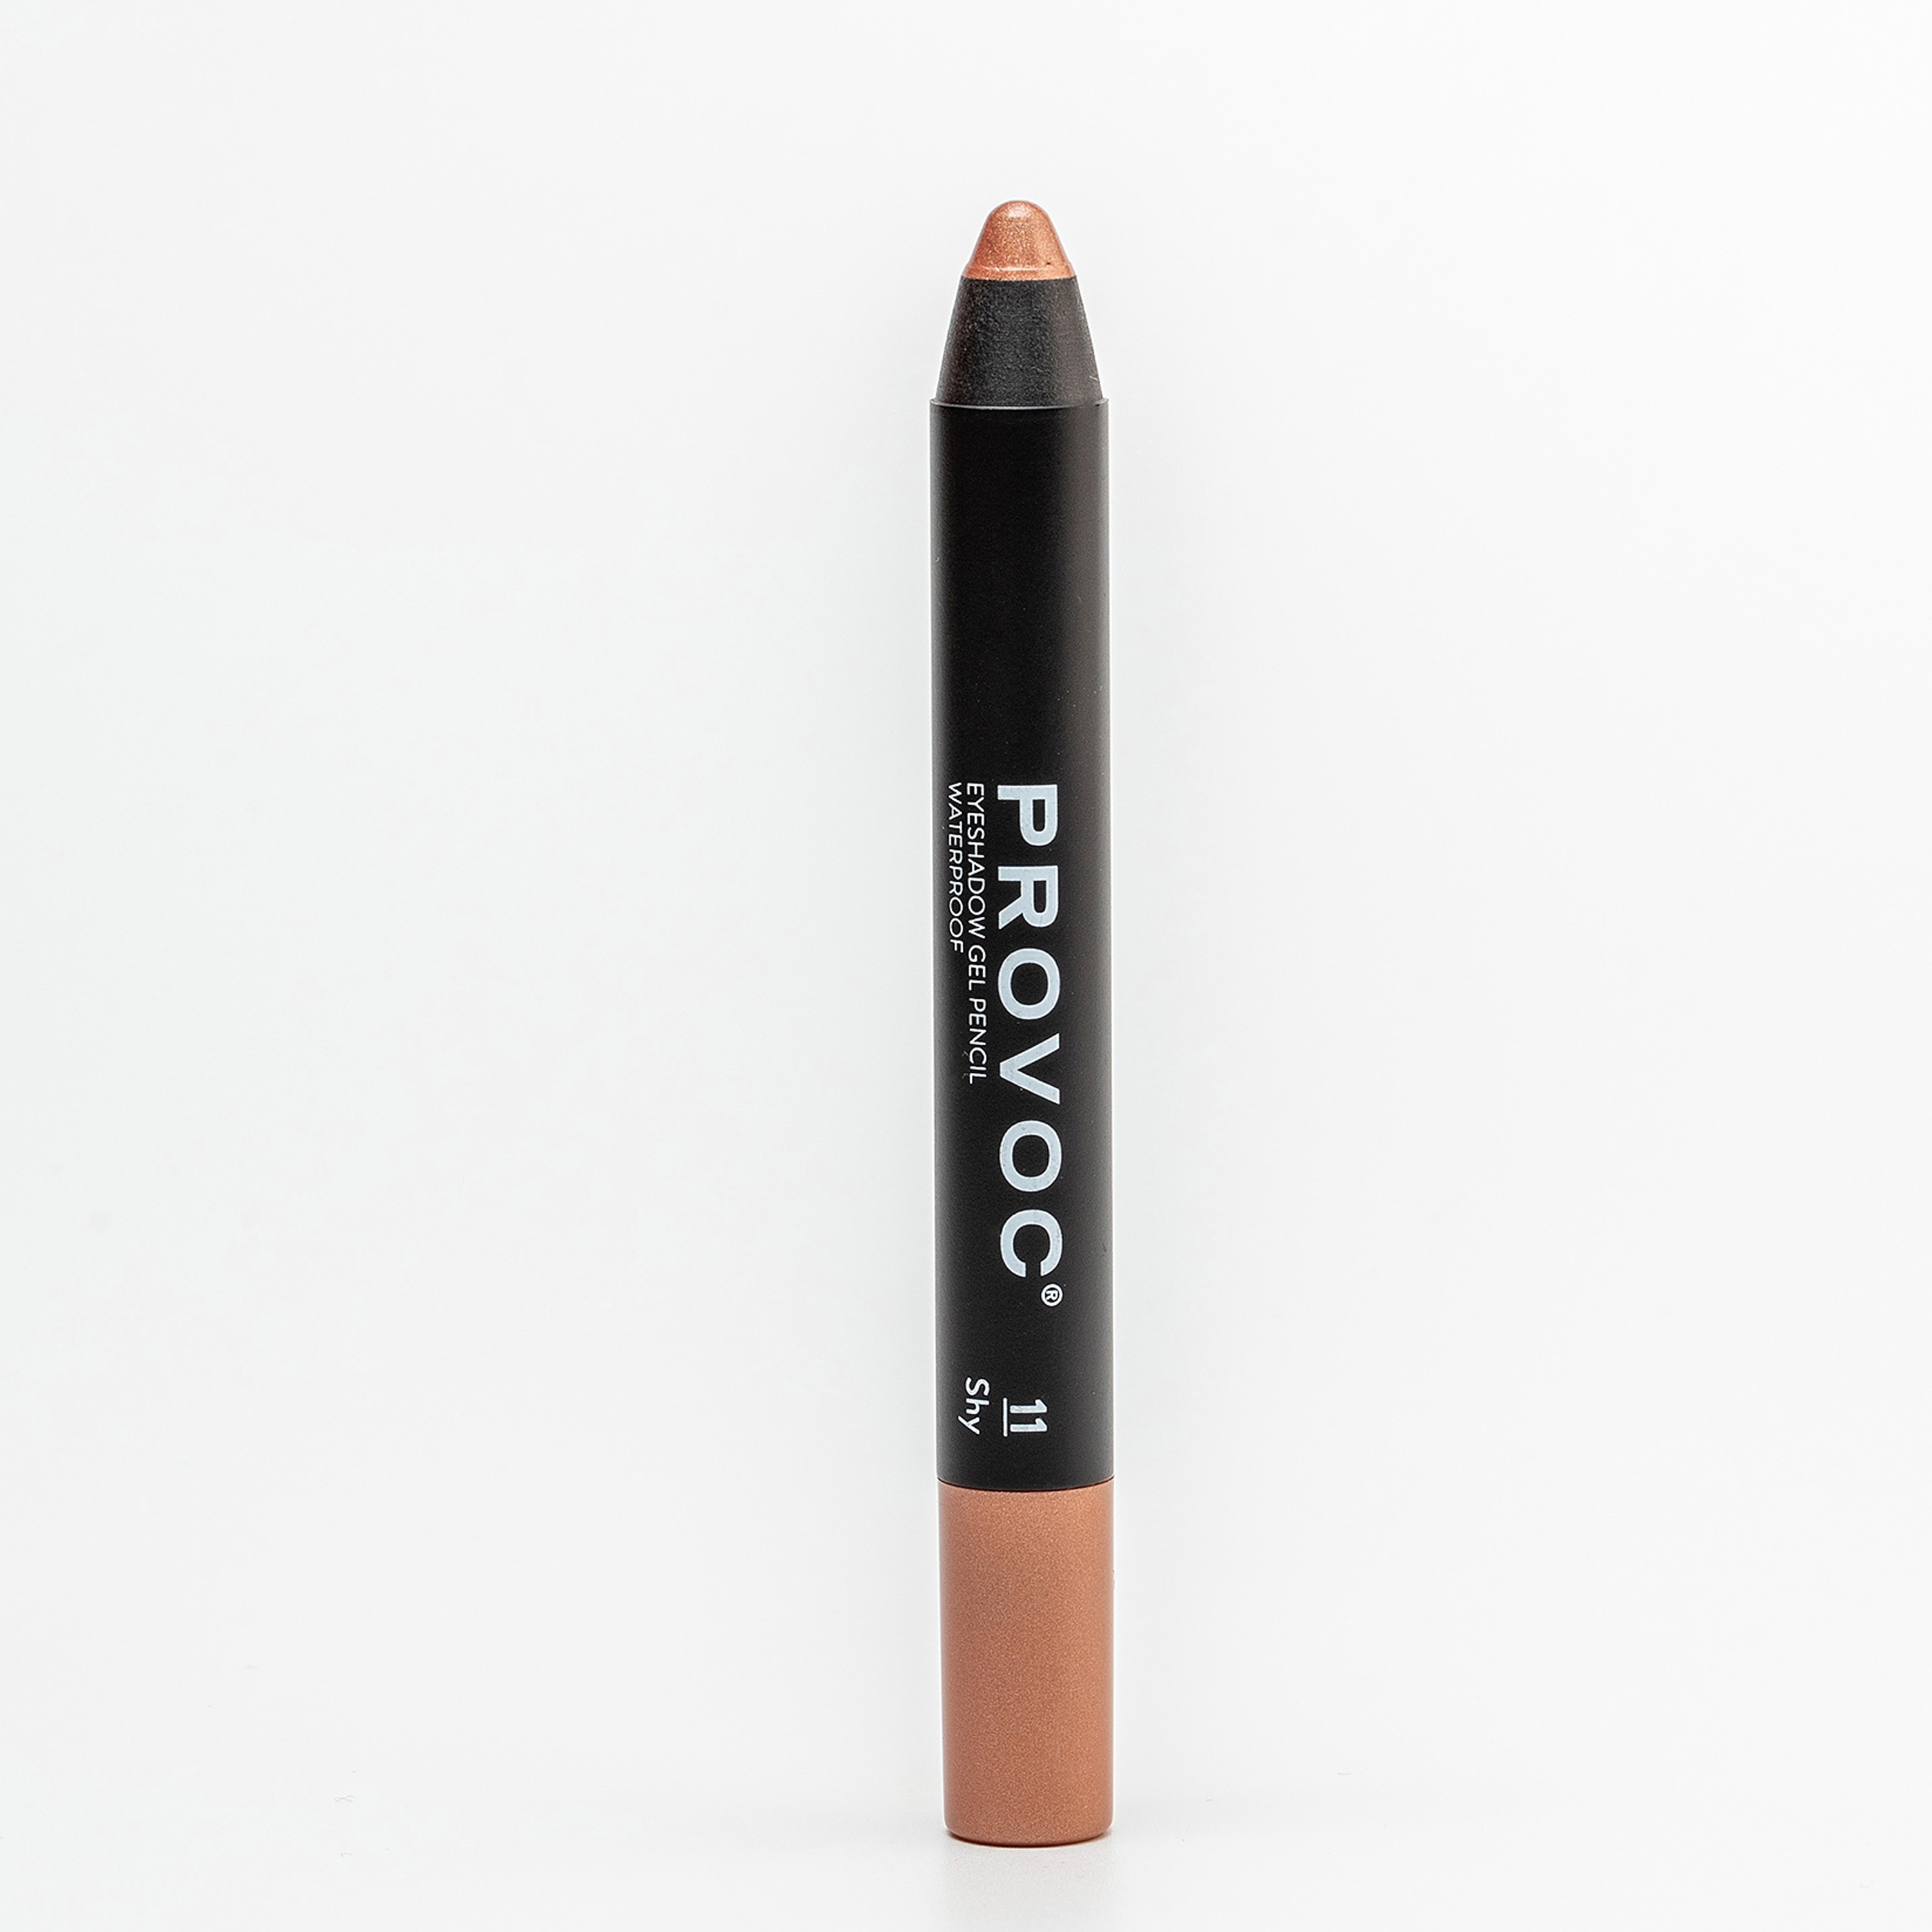 Тени-карандаш PROVOC Eyeshadow Pencil L водостойкие, шиммер 11 персиковый, 2,3 г тени карандаш водостойкие матовые 06 темный шоколад eyeshadow pencil 2 3 г